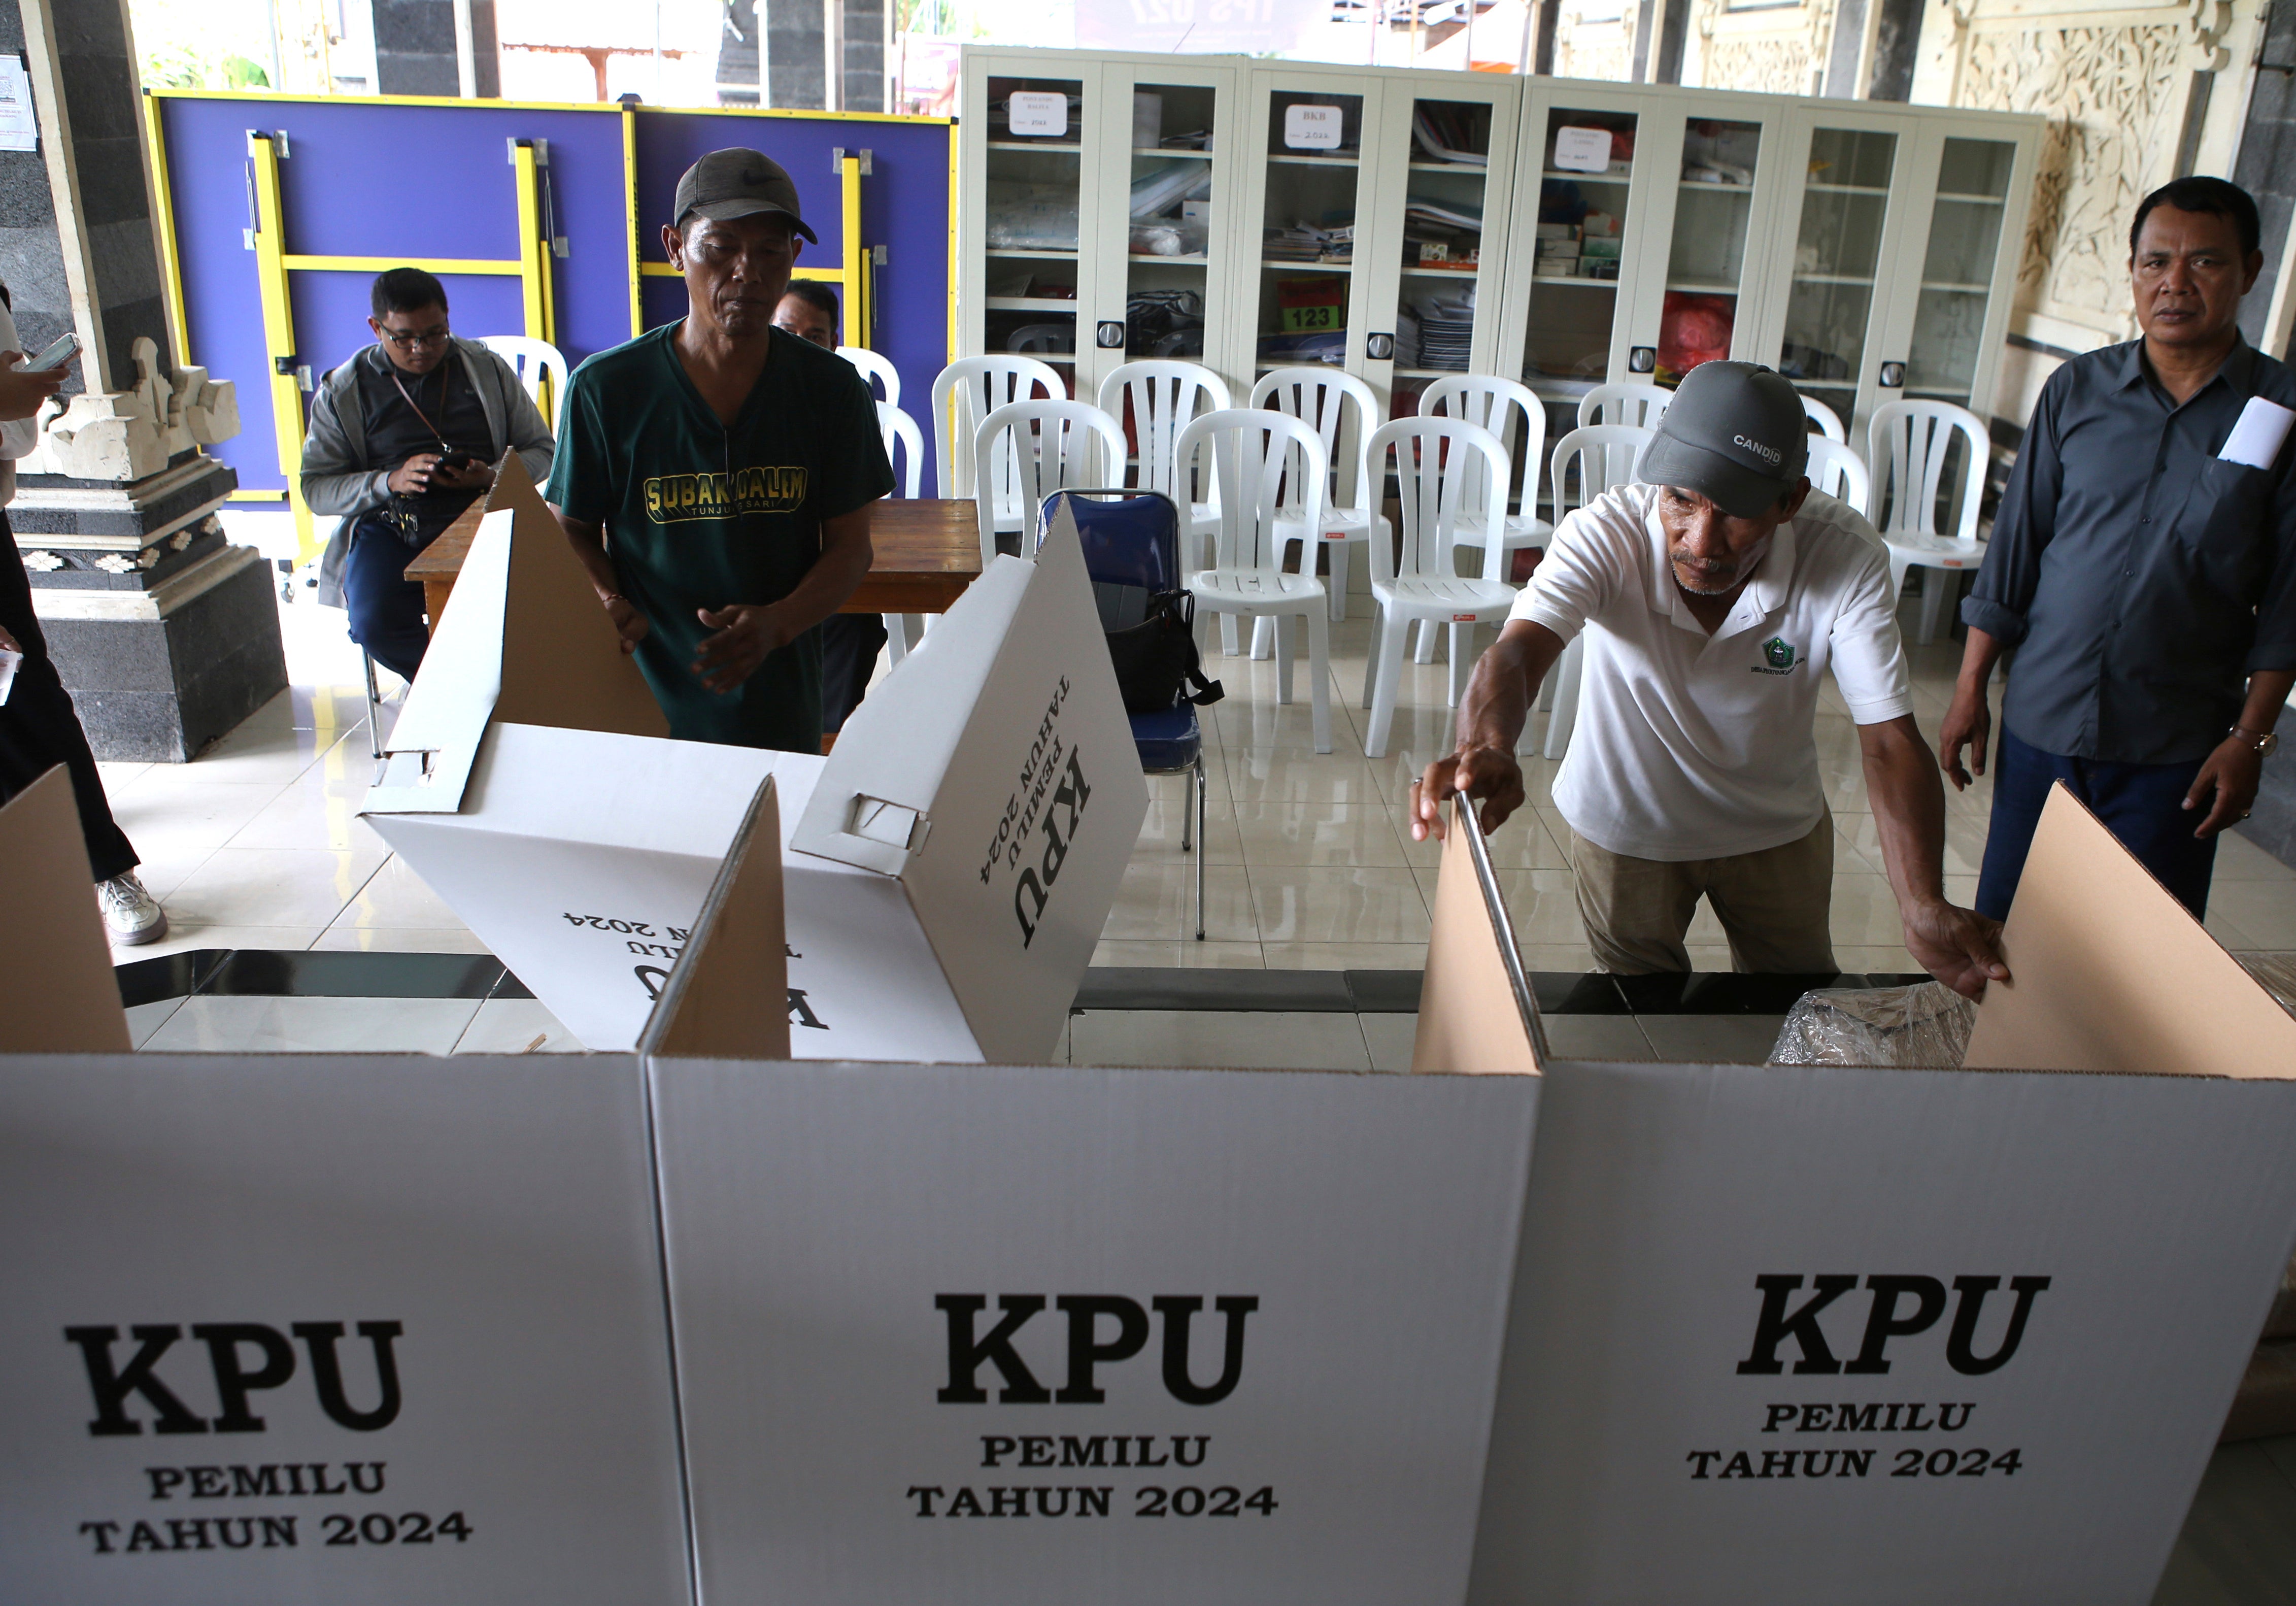 Men prepare a polling station in Denpasar, Bali, Indonesia